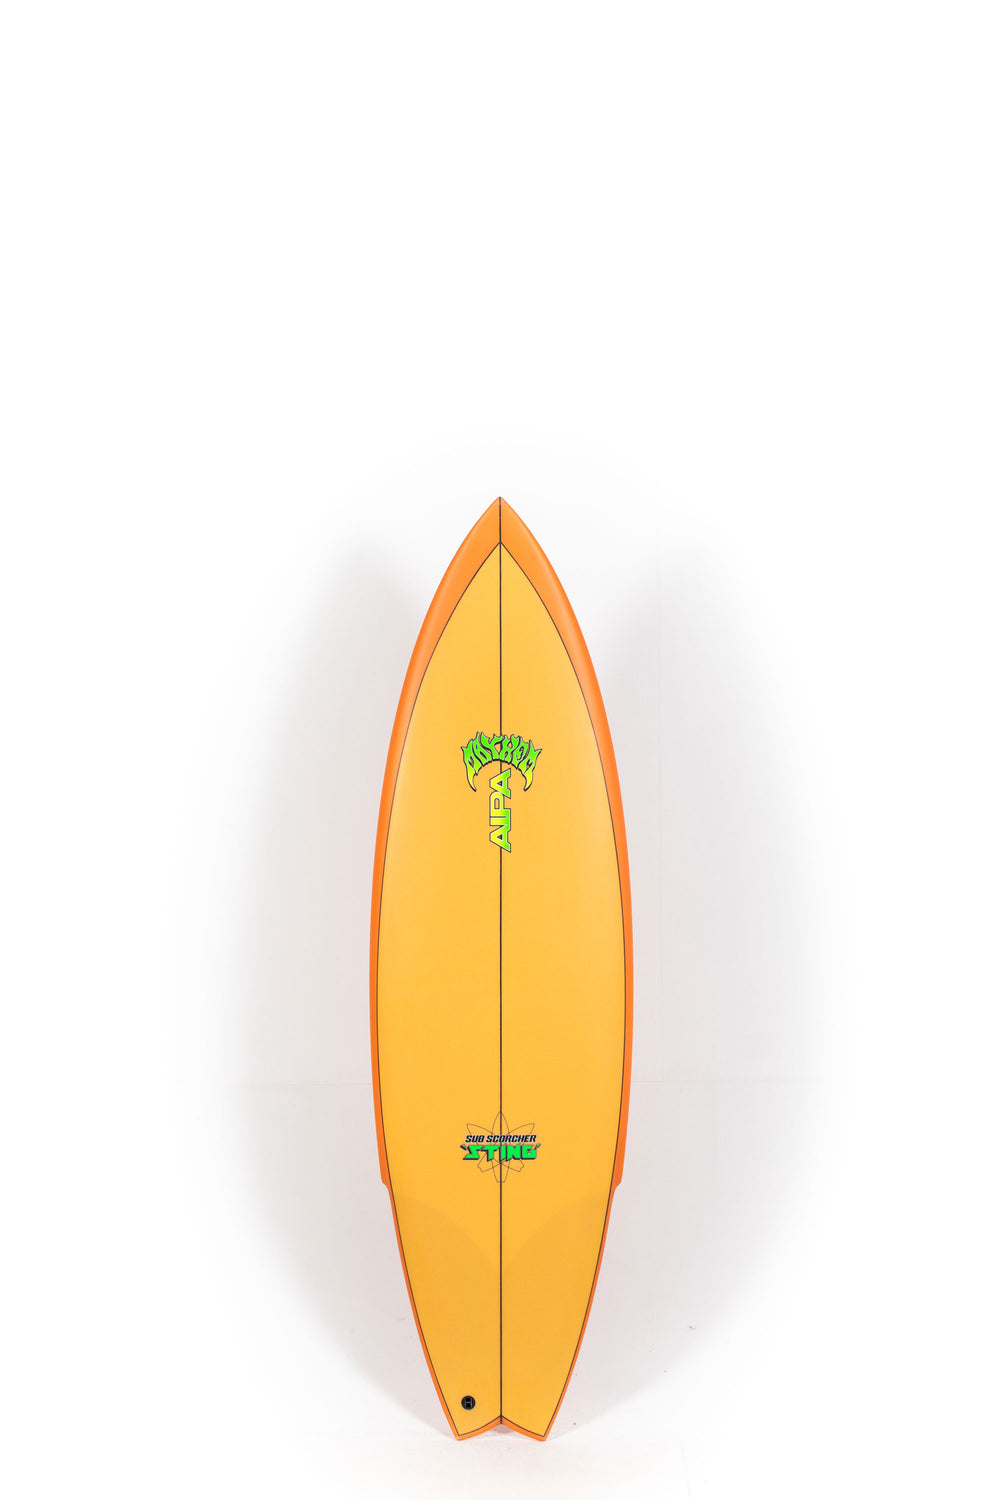 Lost Surfboard - SUB SCORCHER STING by Mayhem x Aipa - 5'9” x 19 